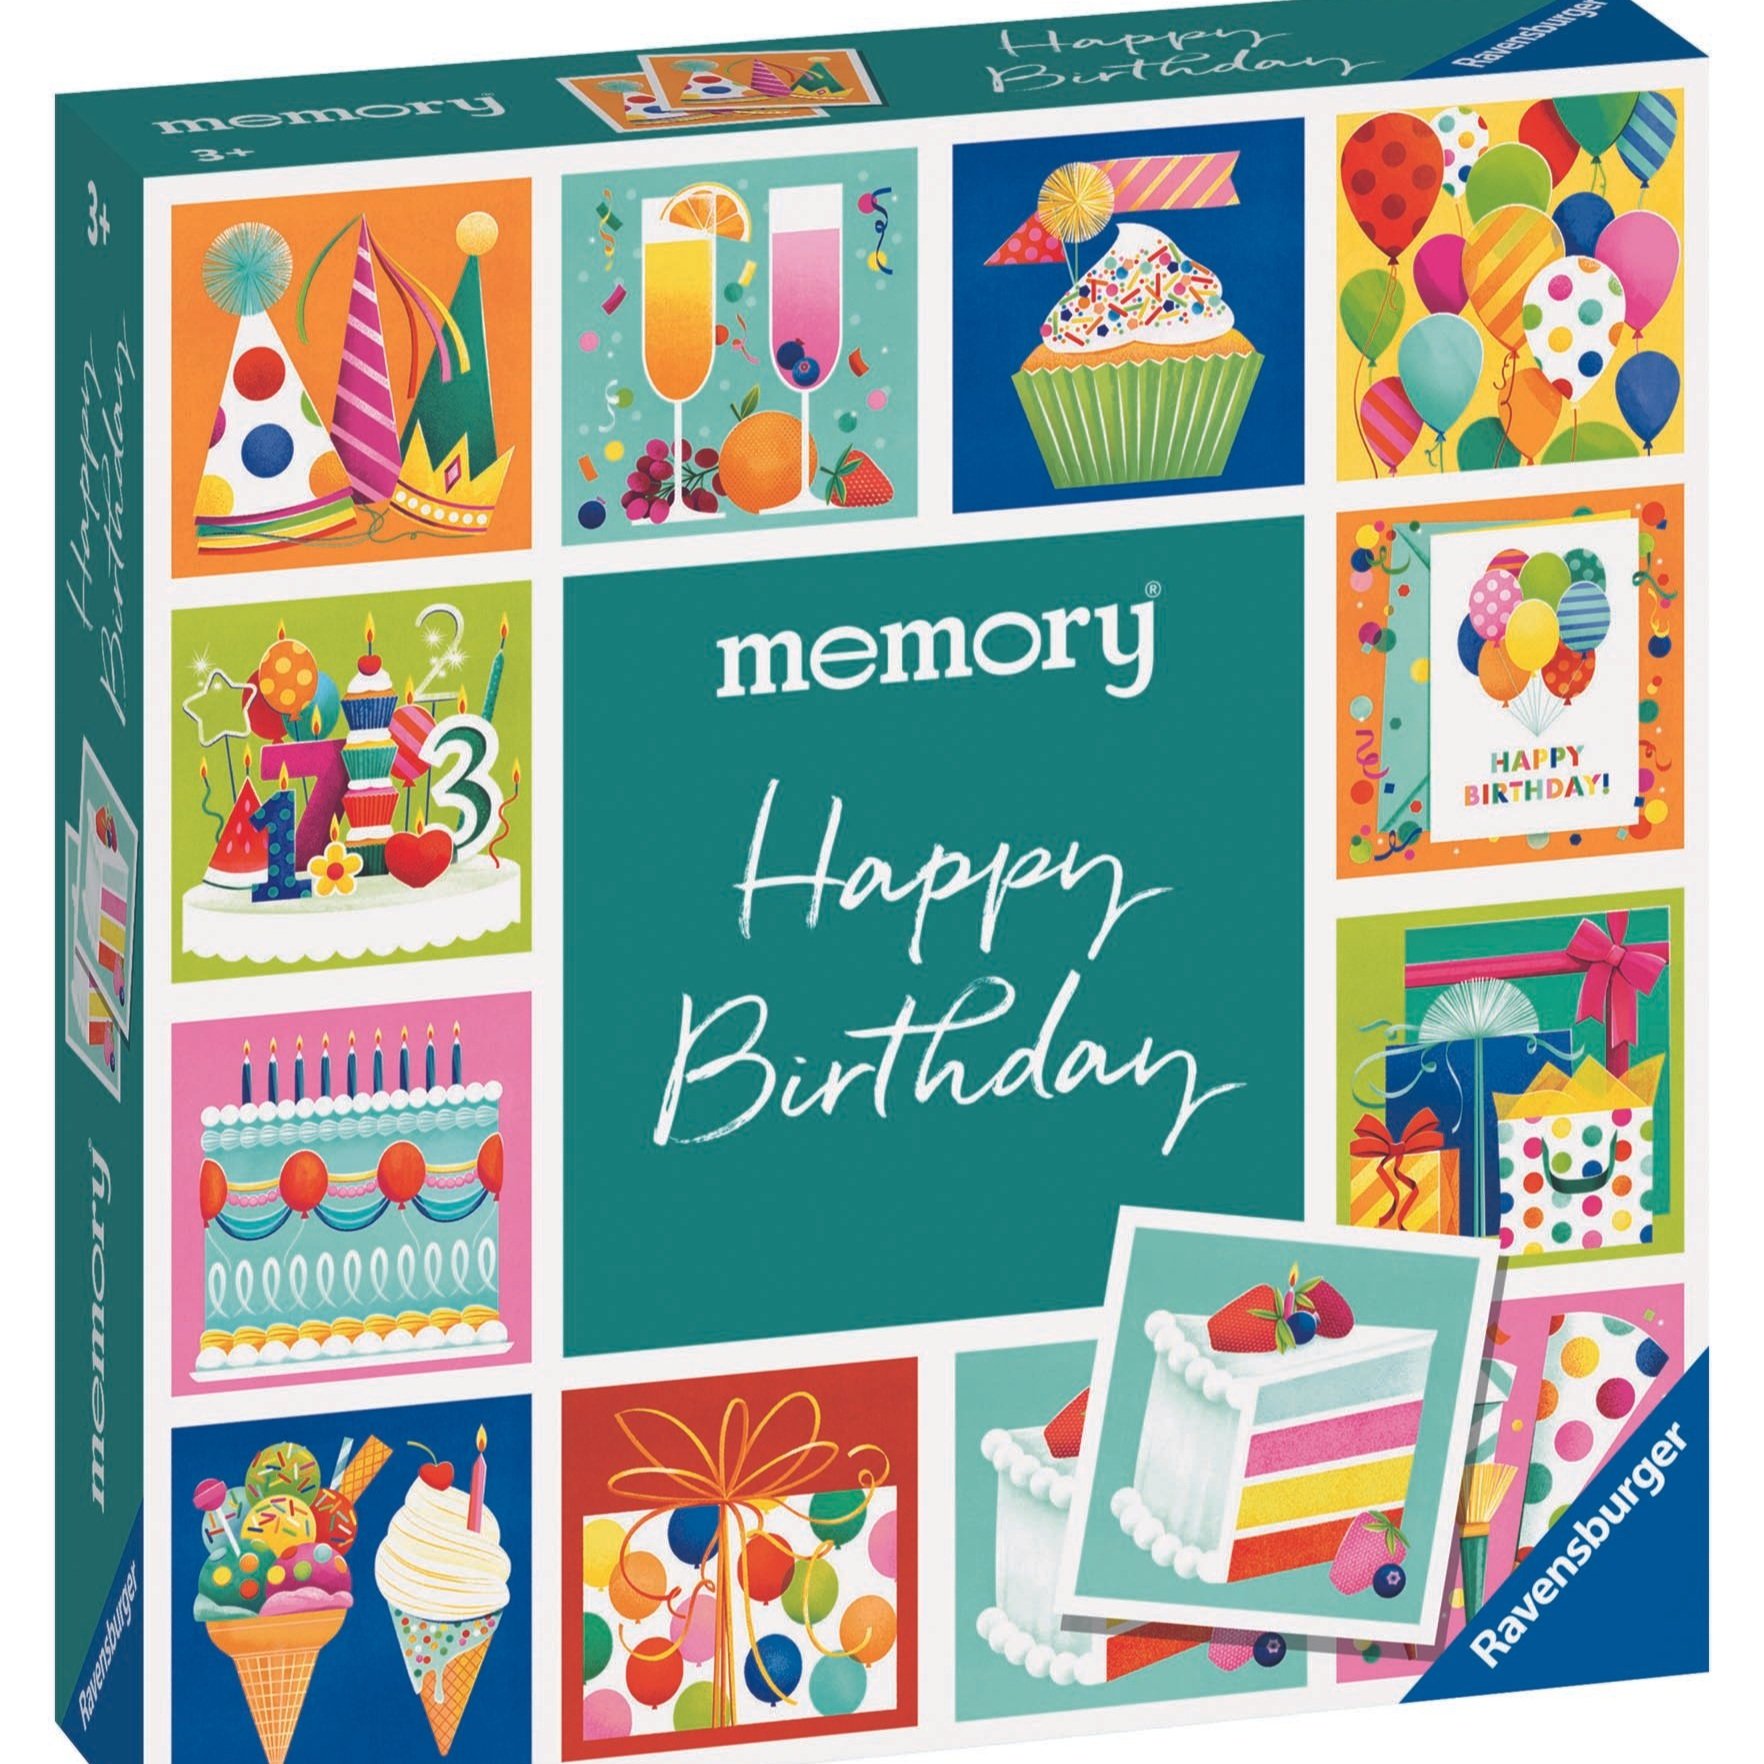 MemoryMoments_Birthday_1.jpg